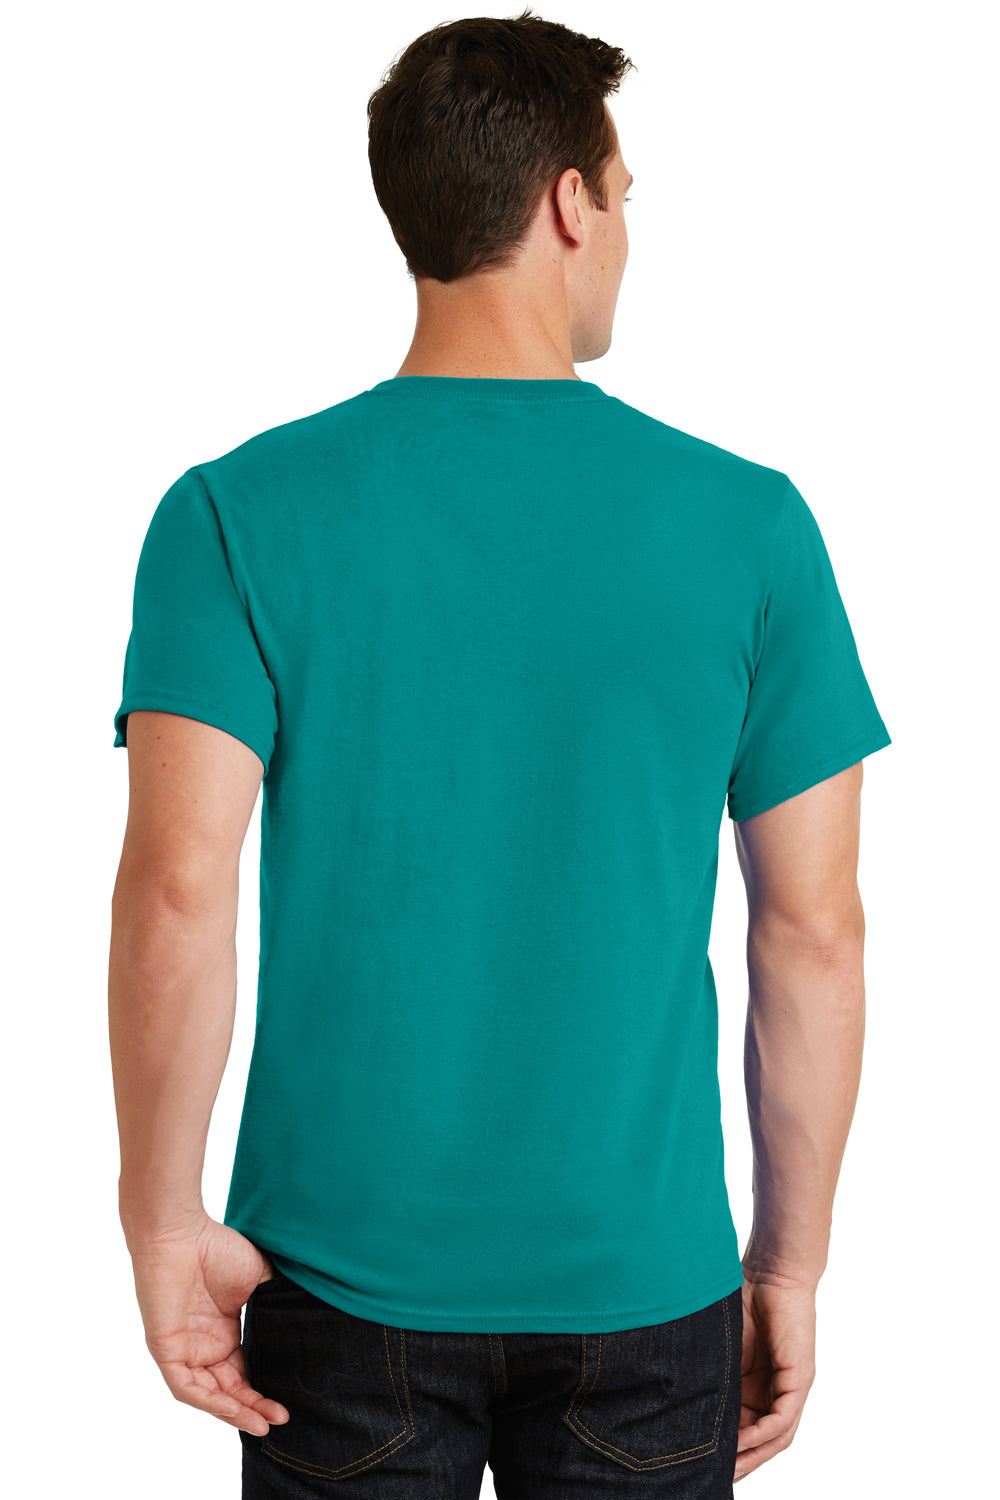 Port & Company PC61 Mens Essential Short Sleeve Crewneck T-Shirt Jade Green Back